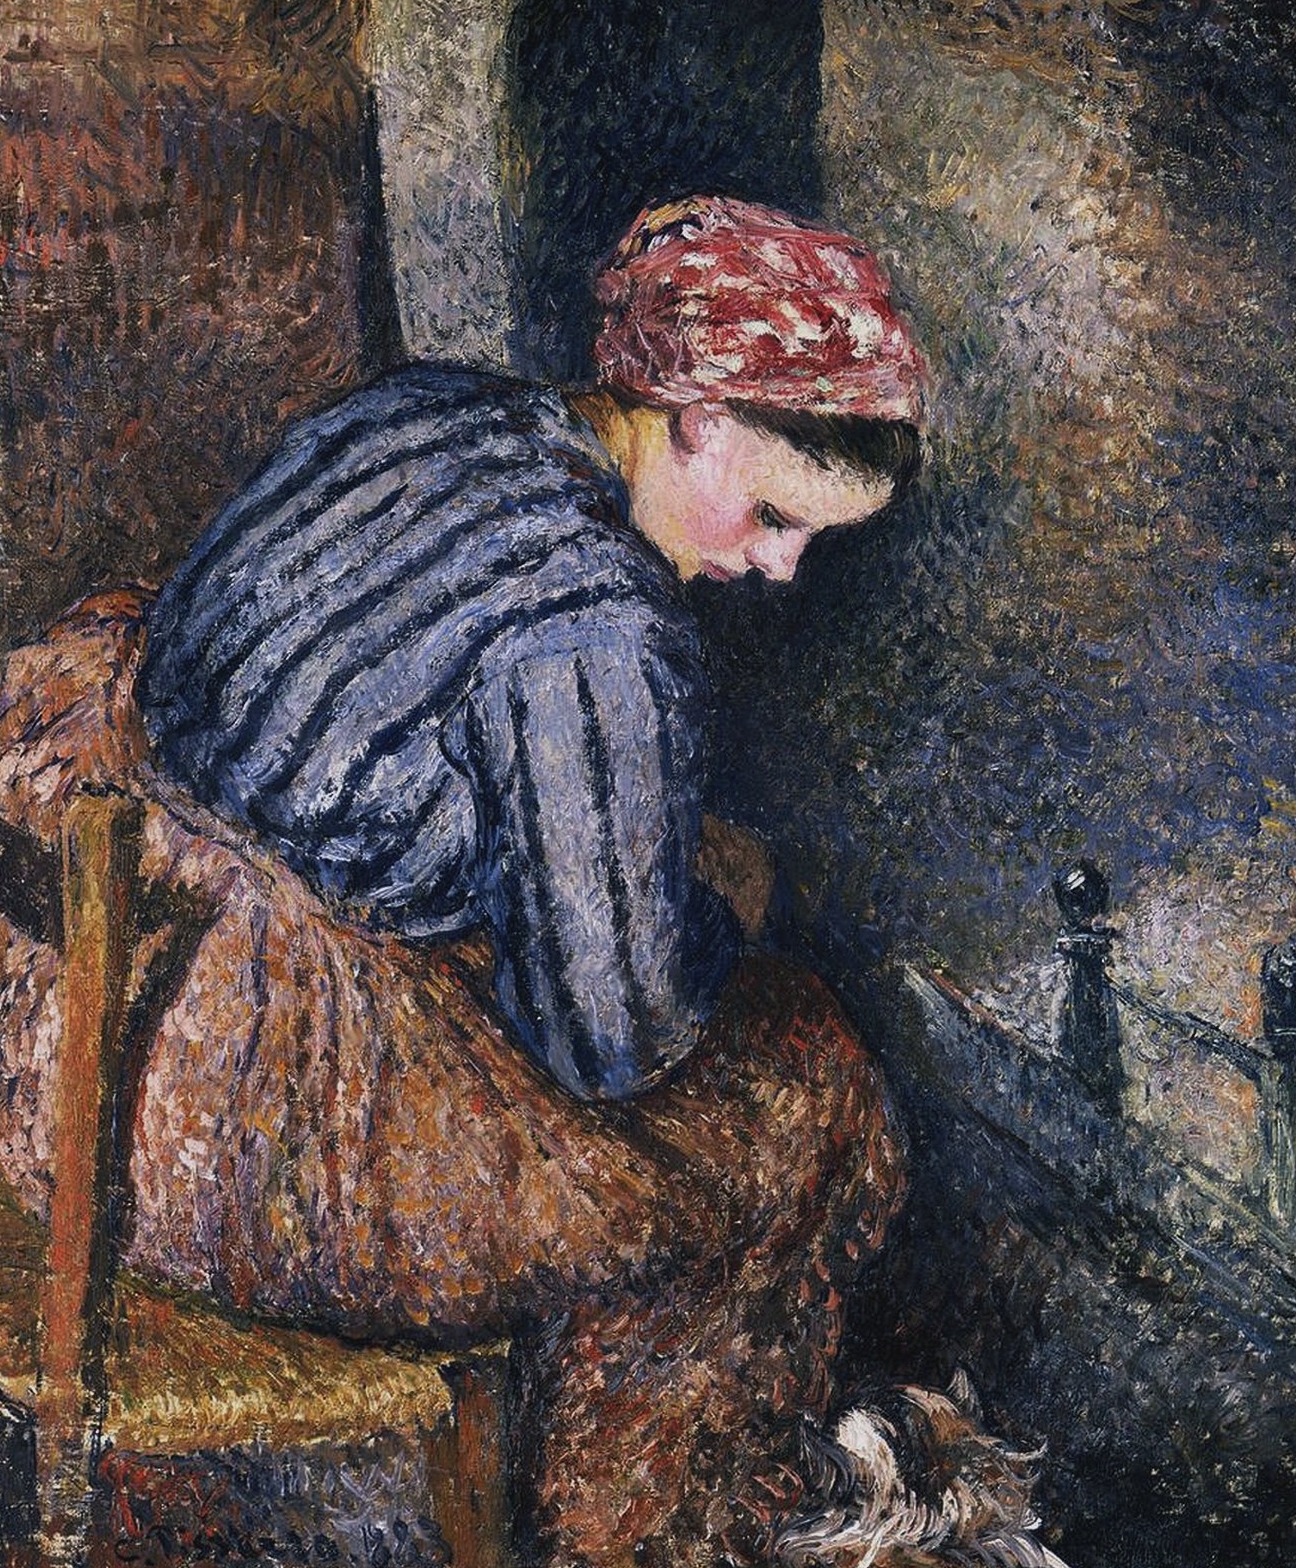 Camille+Pissarro-1830-1903 (336).jpg